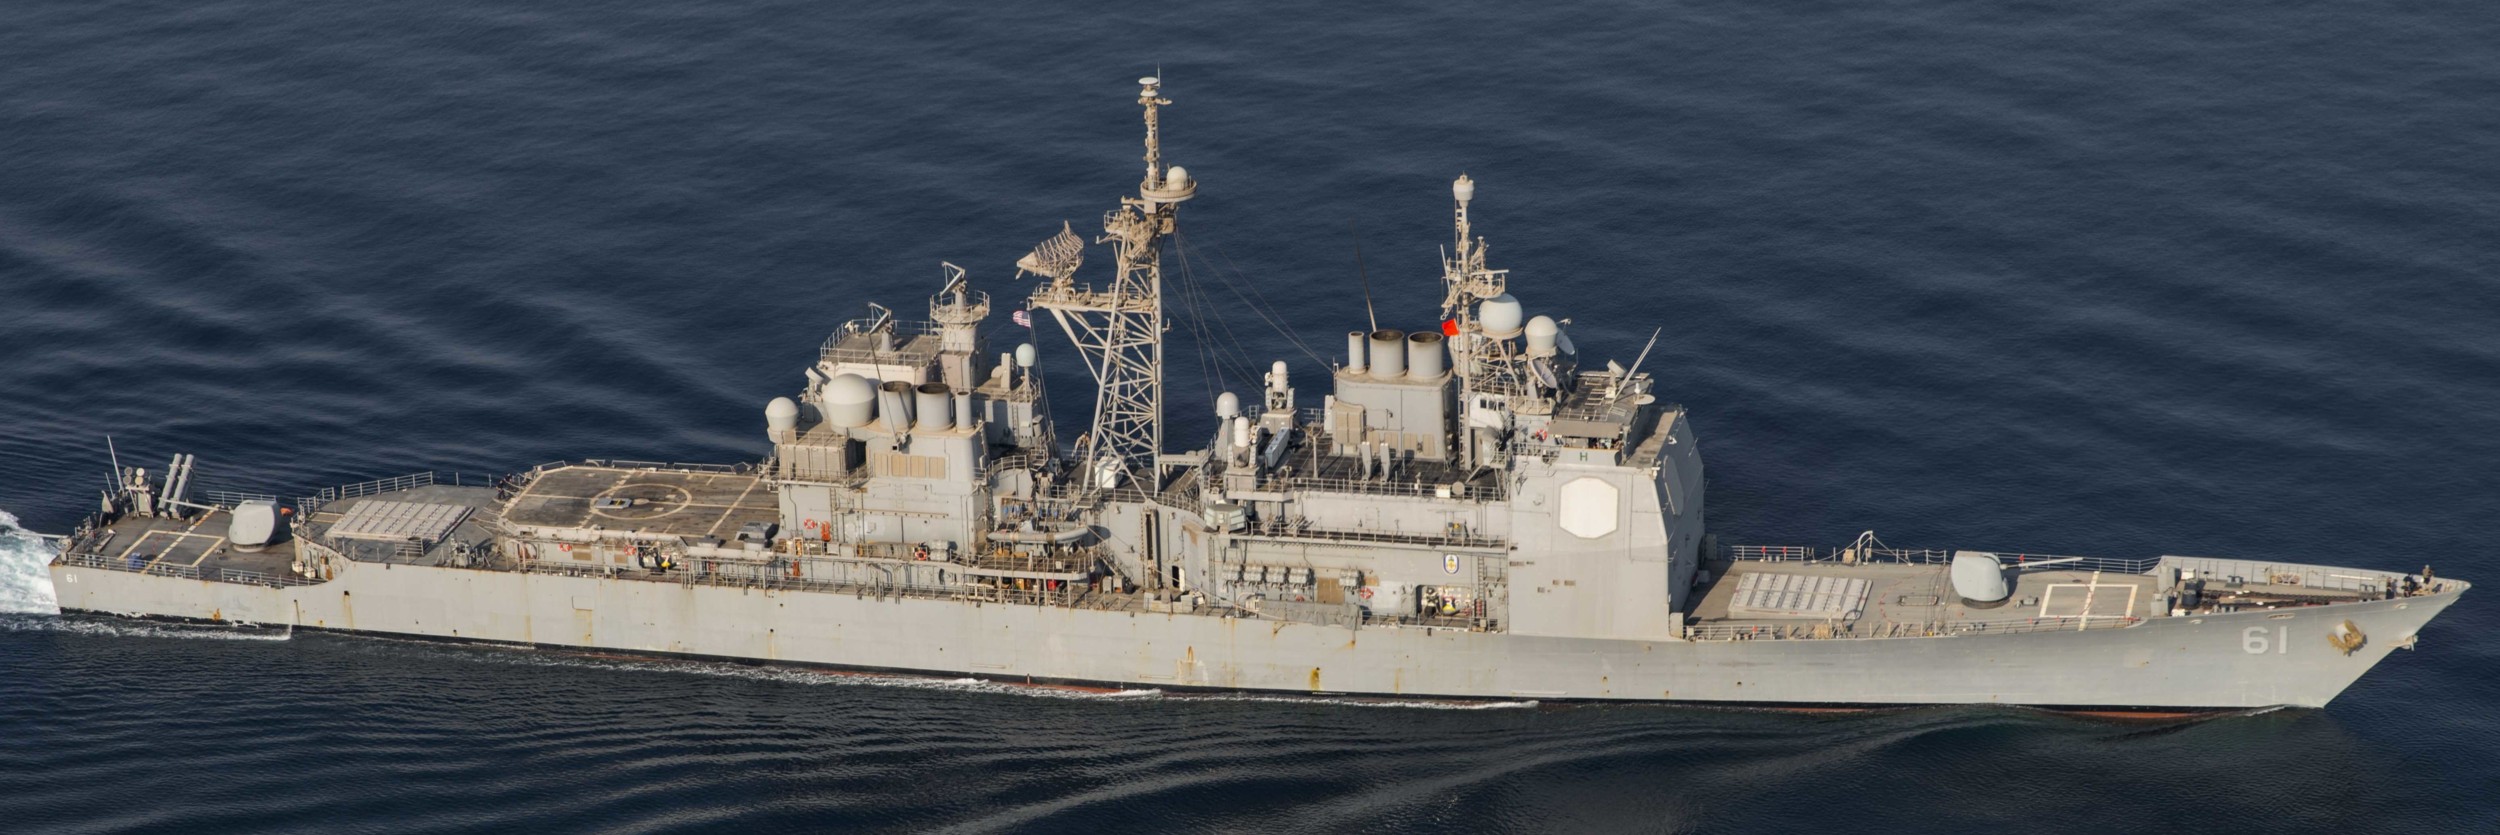 cg-61 uss monterey ticonderoga class guided missile cruiser aegis us navy 85